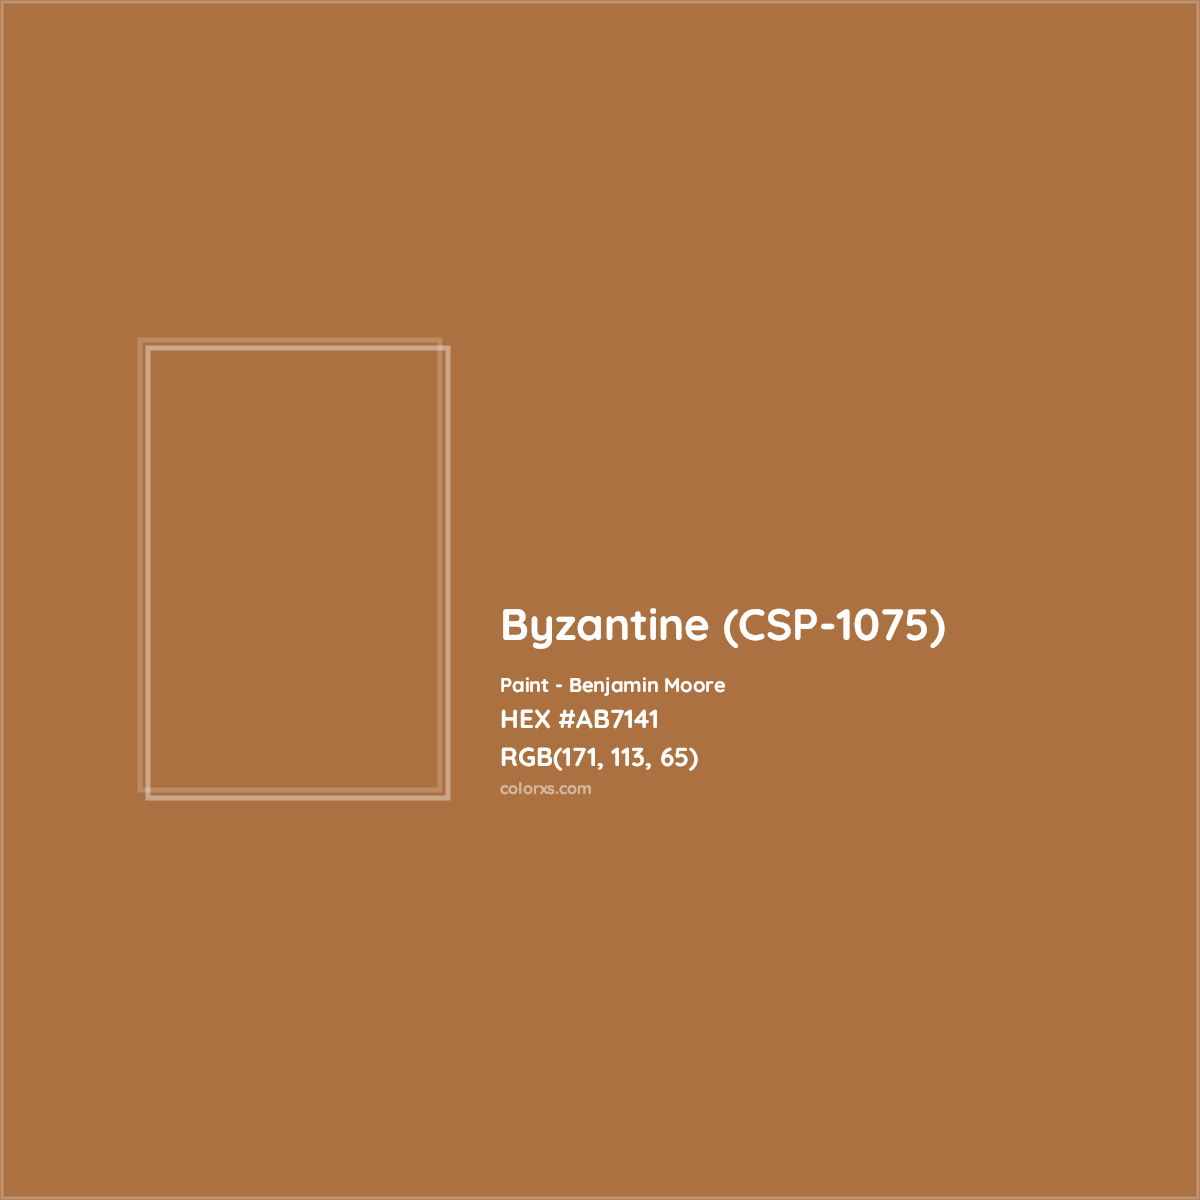 HEX #AB7141 Byzantine (CSP-1075) Paint Benjamin Moore - Color Code